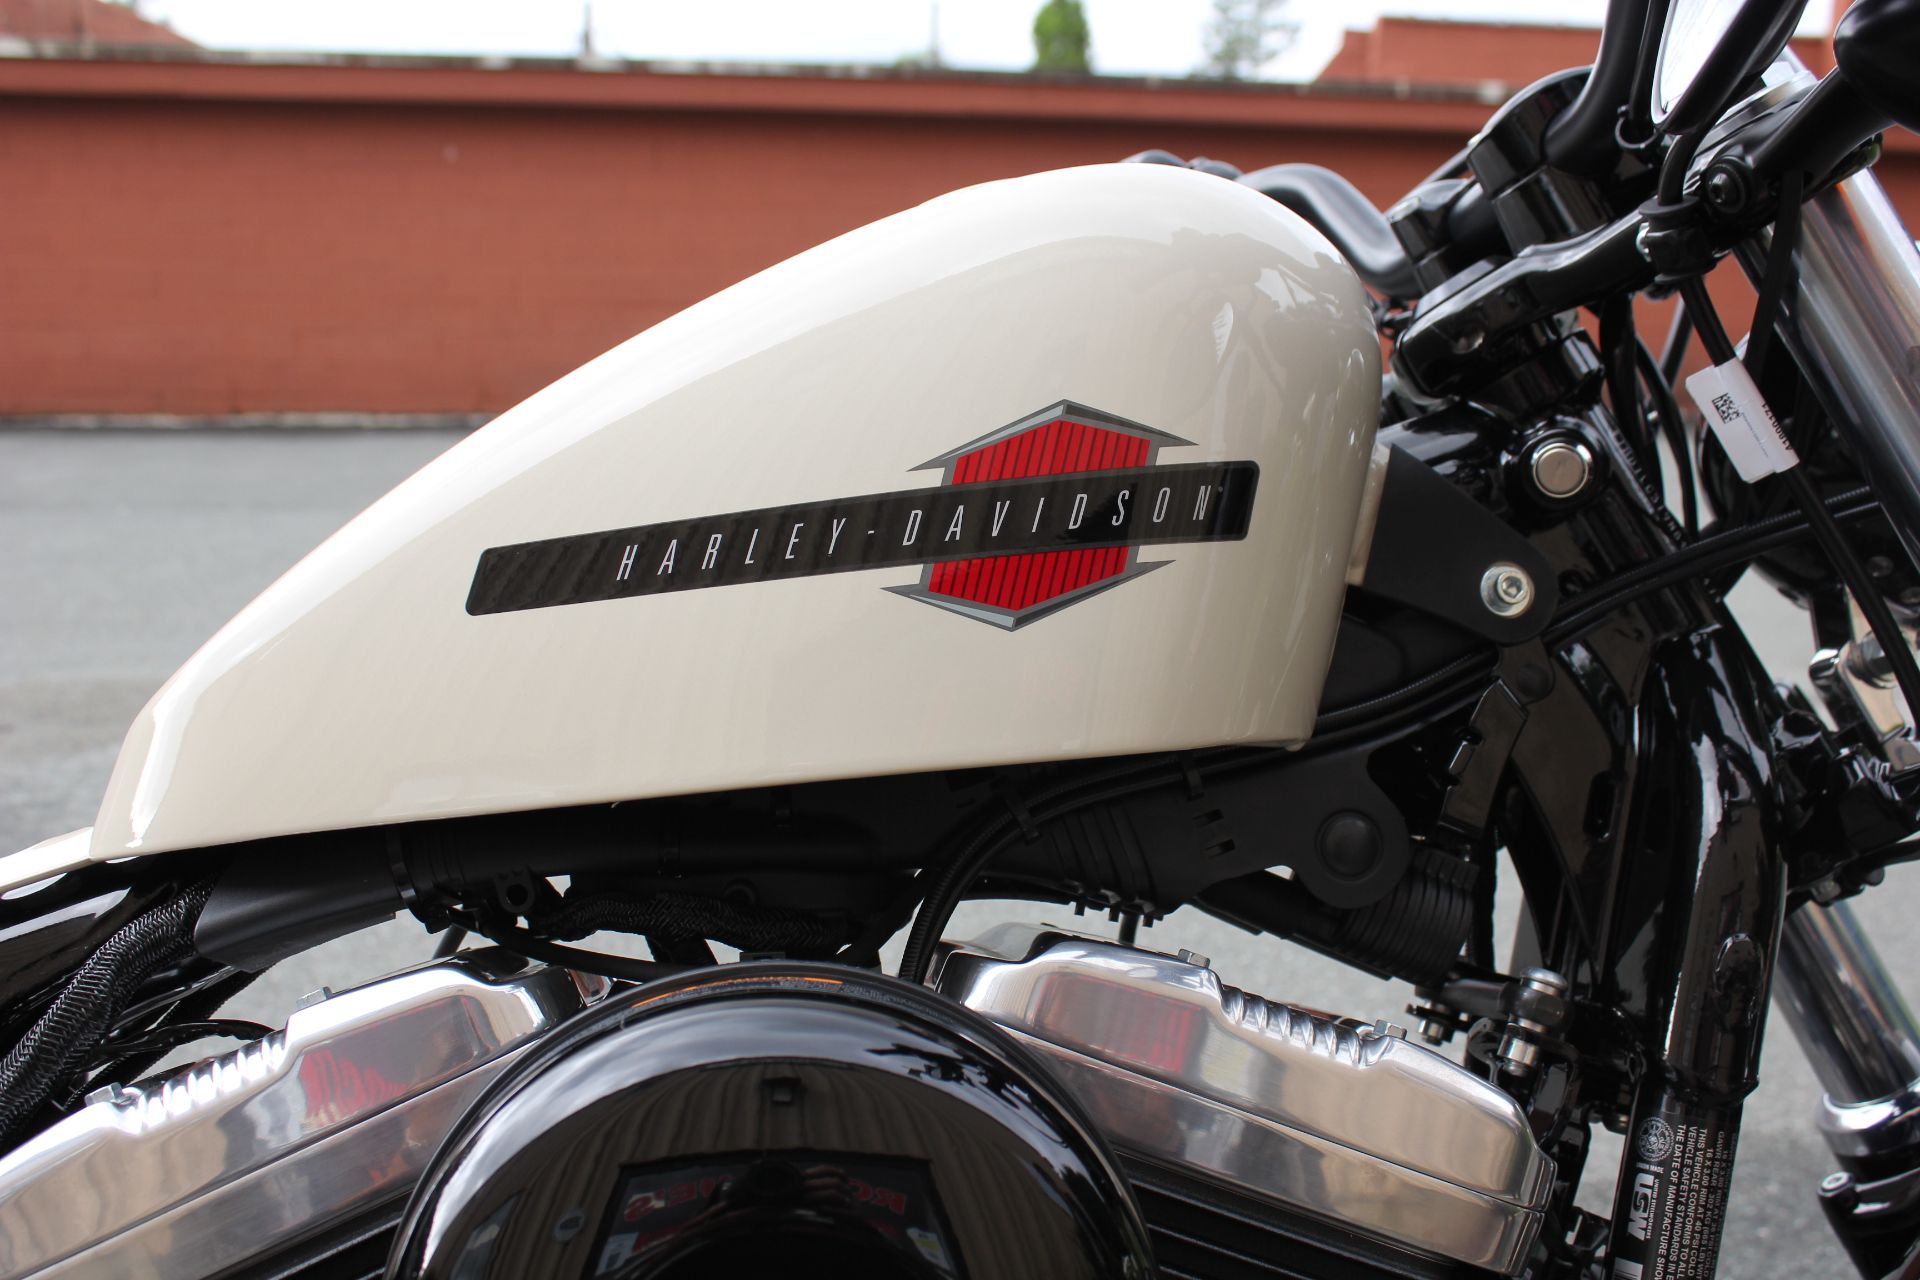 2022 Harley-Davidson Forty-Eight® in Pittsfield, Massachusetts - Photo 13